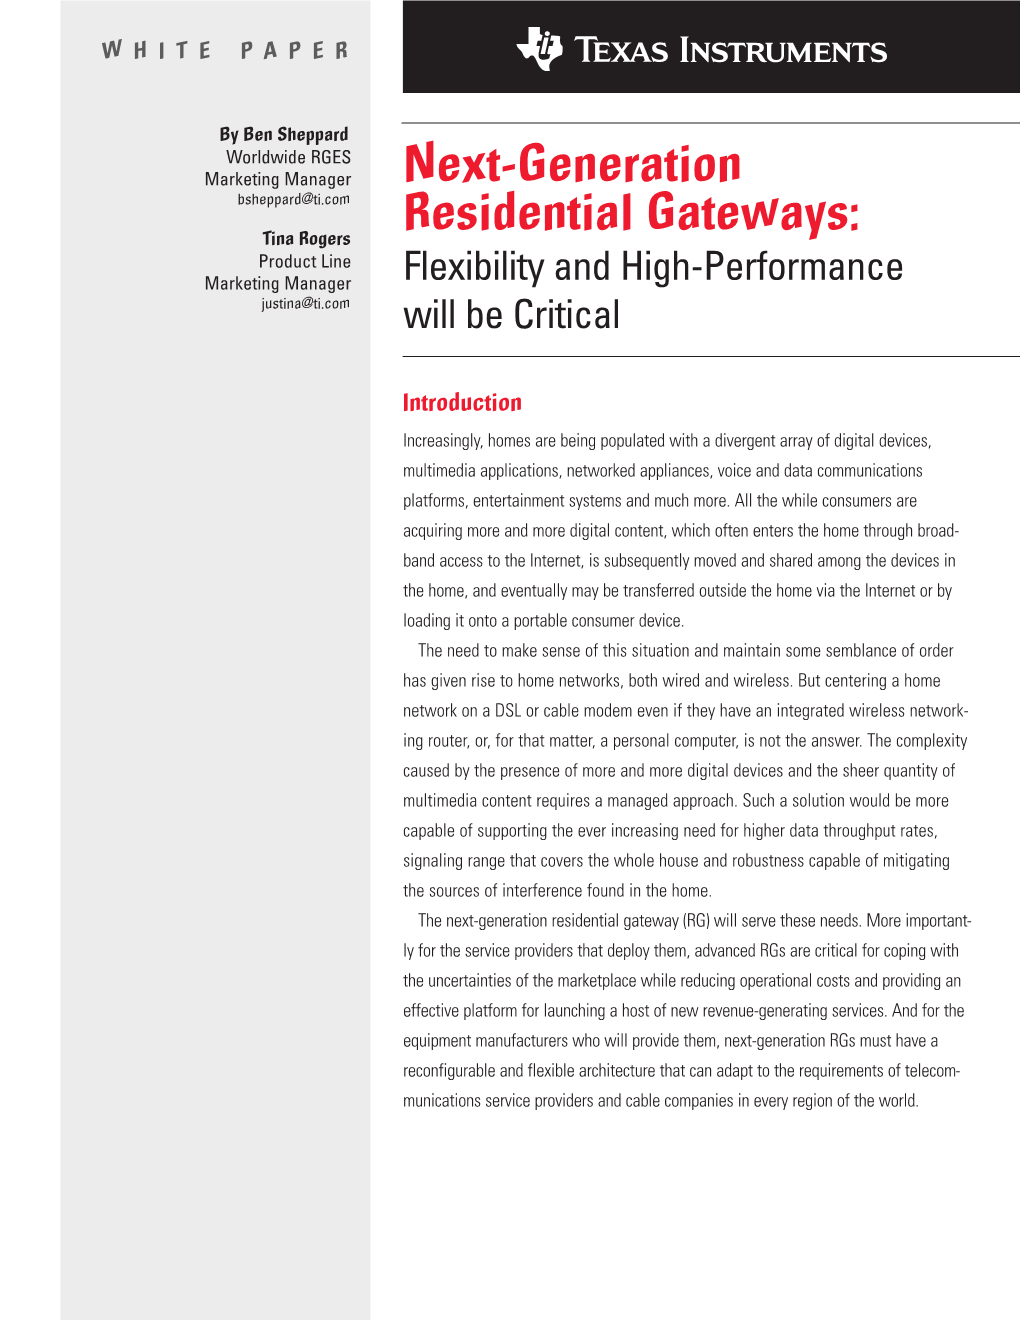 Next-Generation Residential Gateways